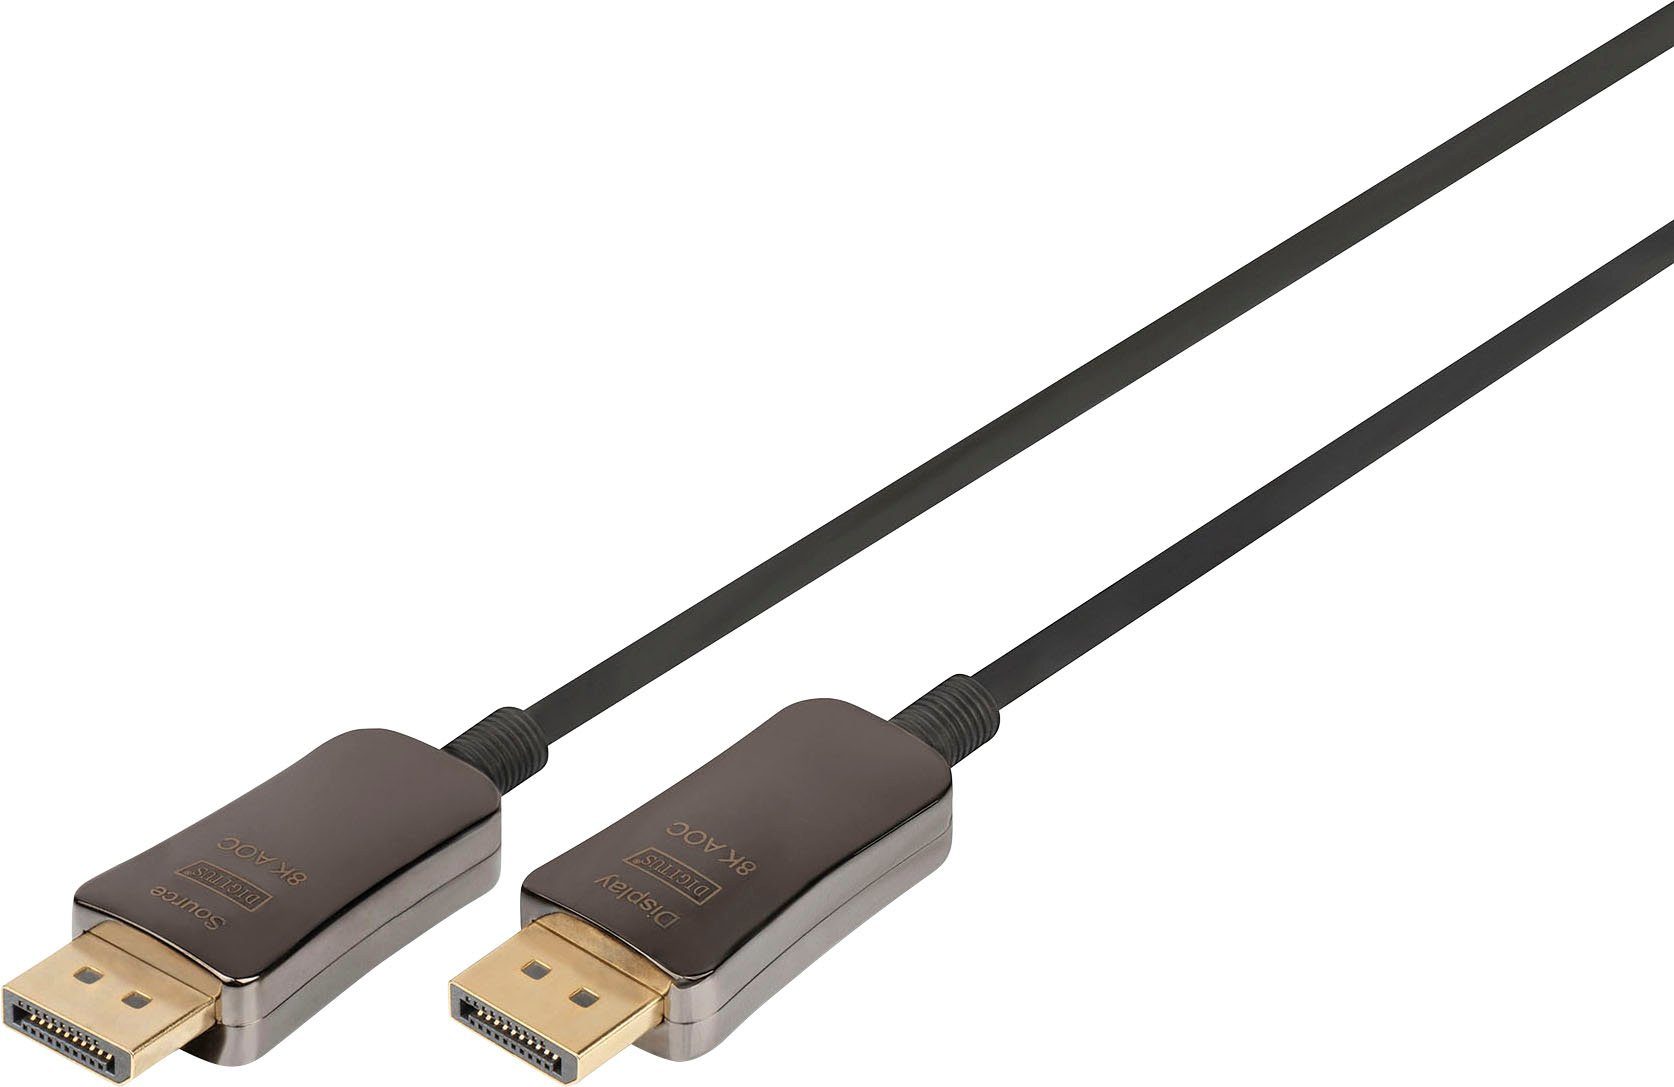 SAT-Kabel, DisplayPort Glasfaserkabel, Digitus (1500 DisplayPort™ Hybrid cm) AOC UHD 8K